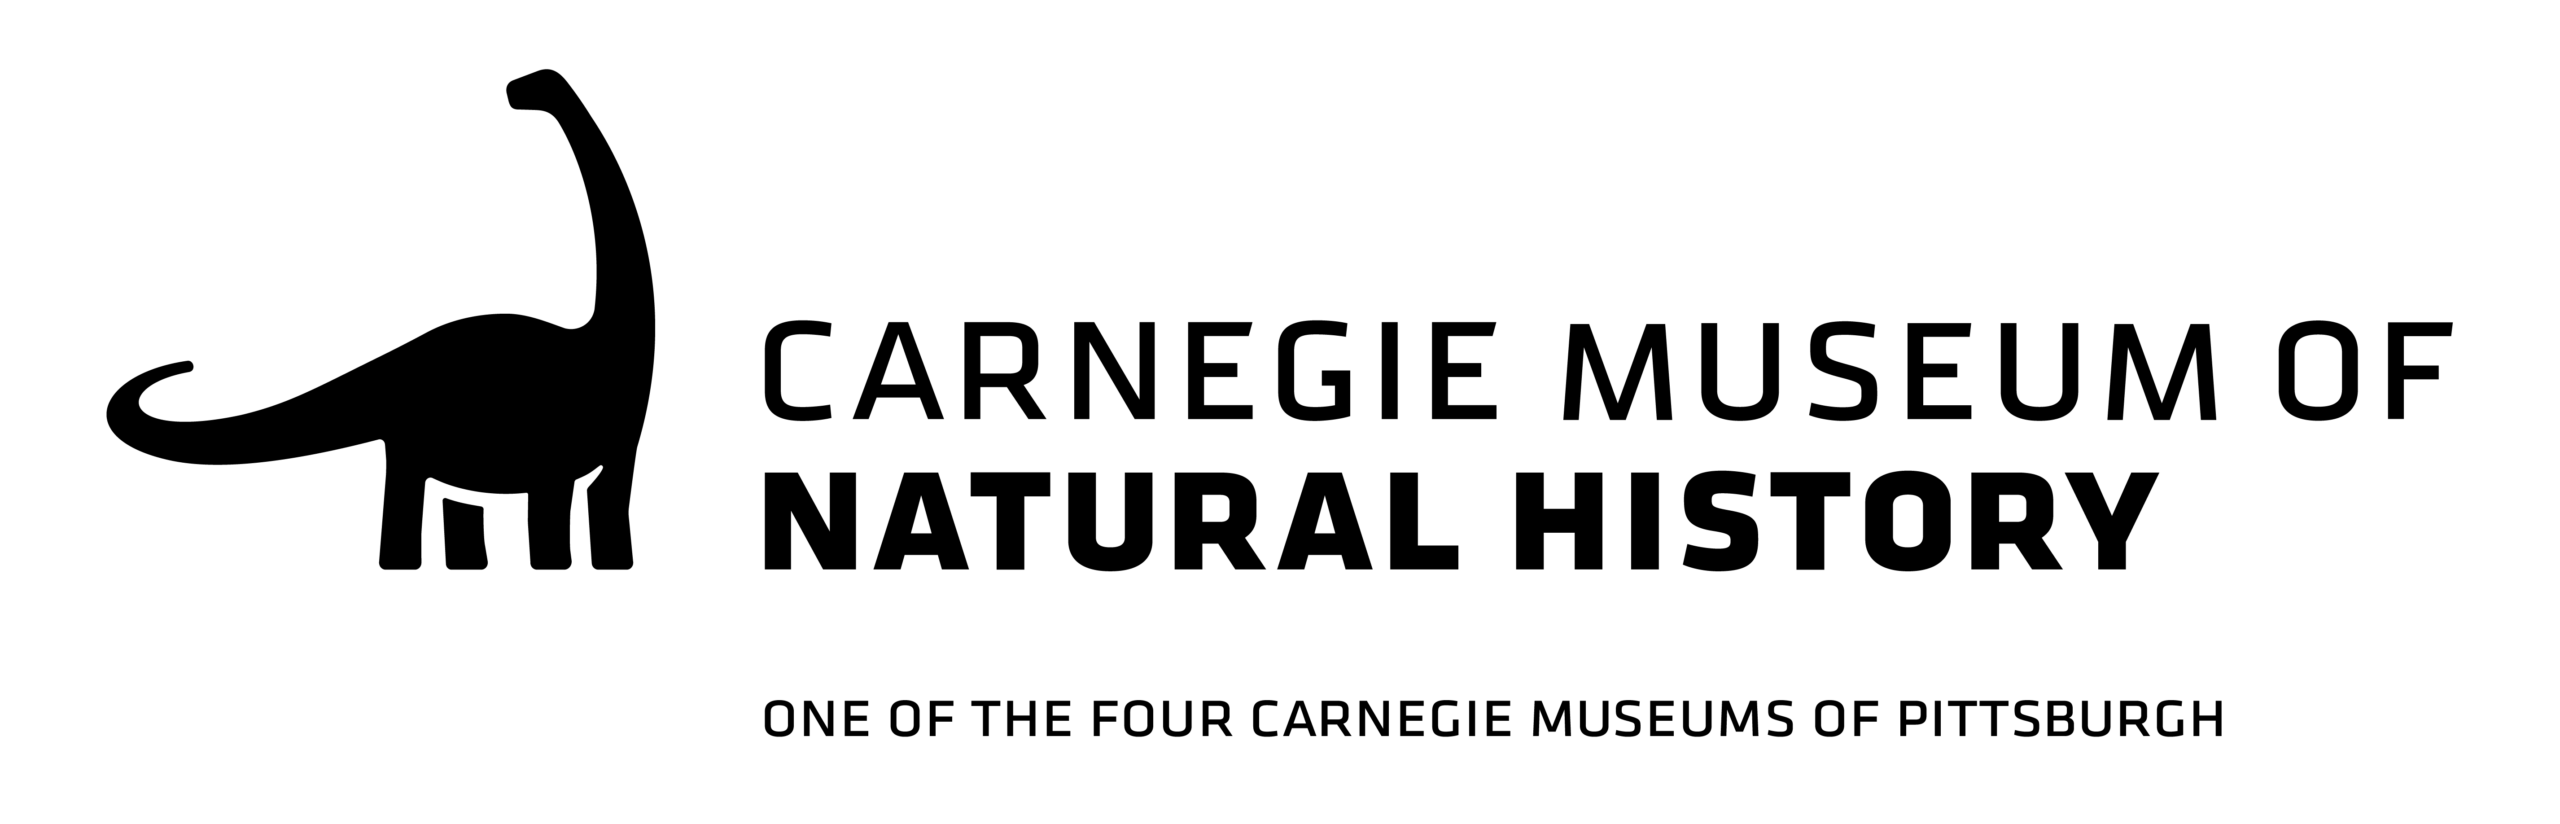 CMNH_Horizontal-Two-Line-Logo